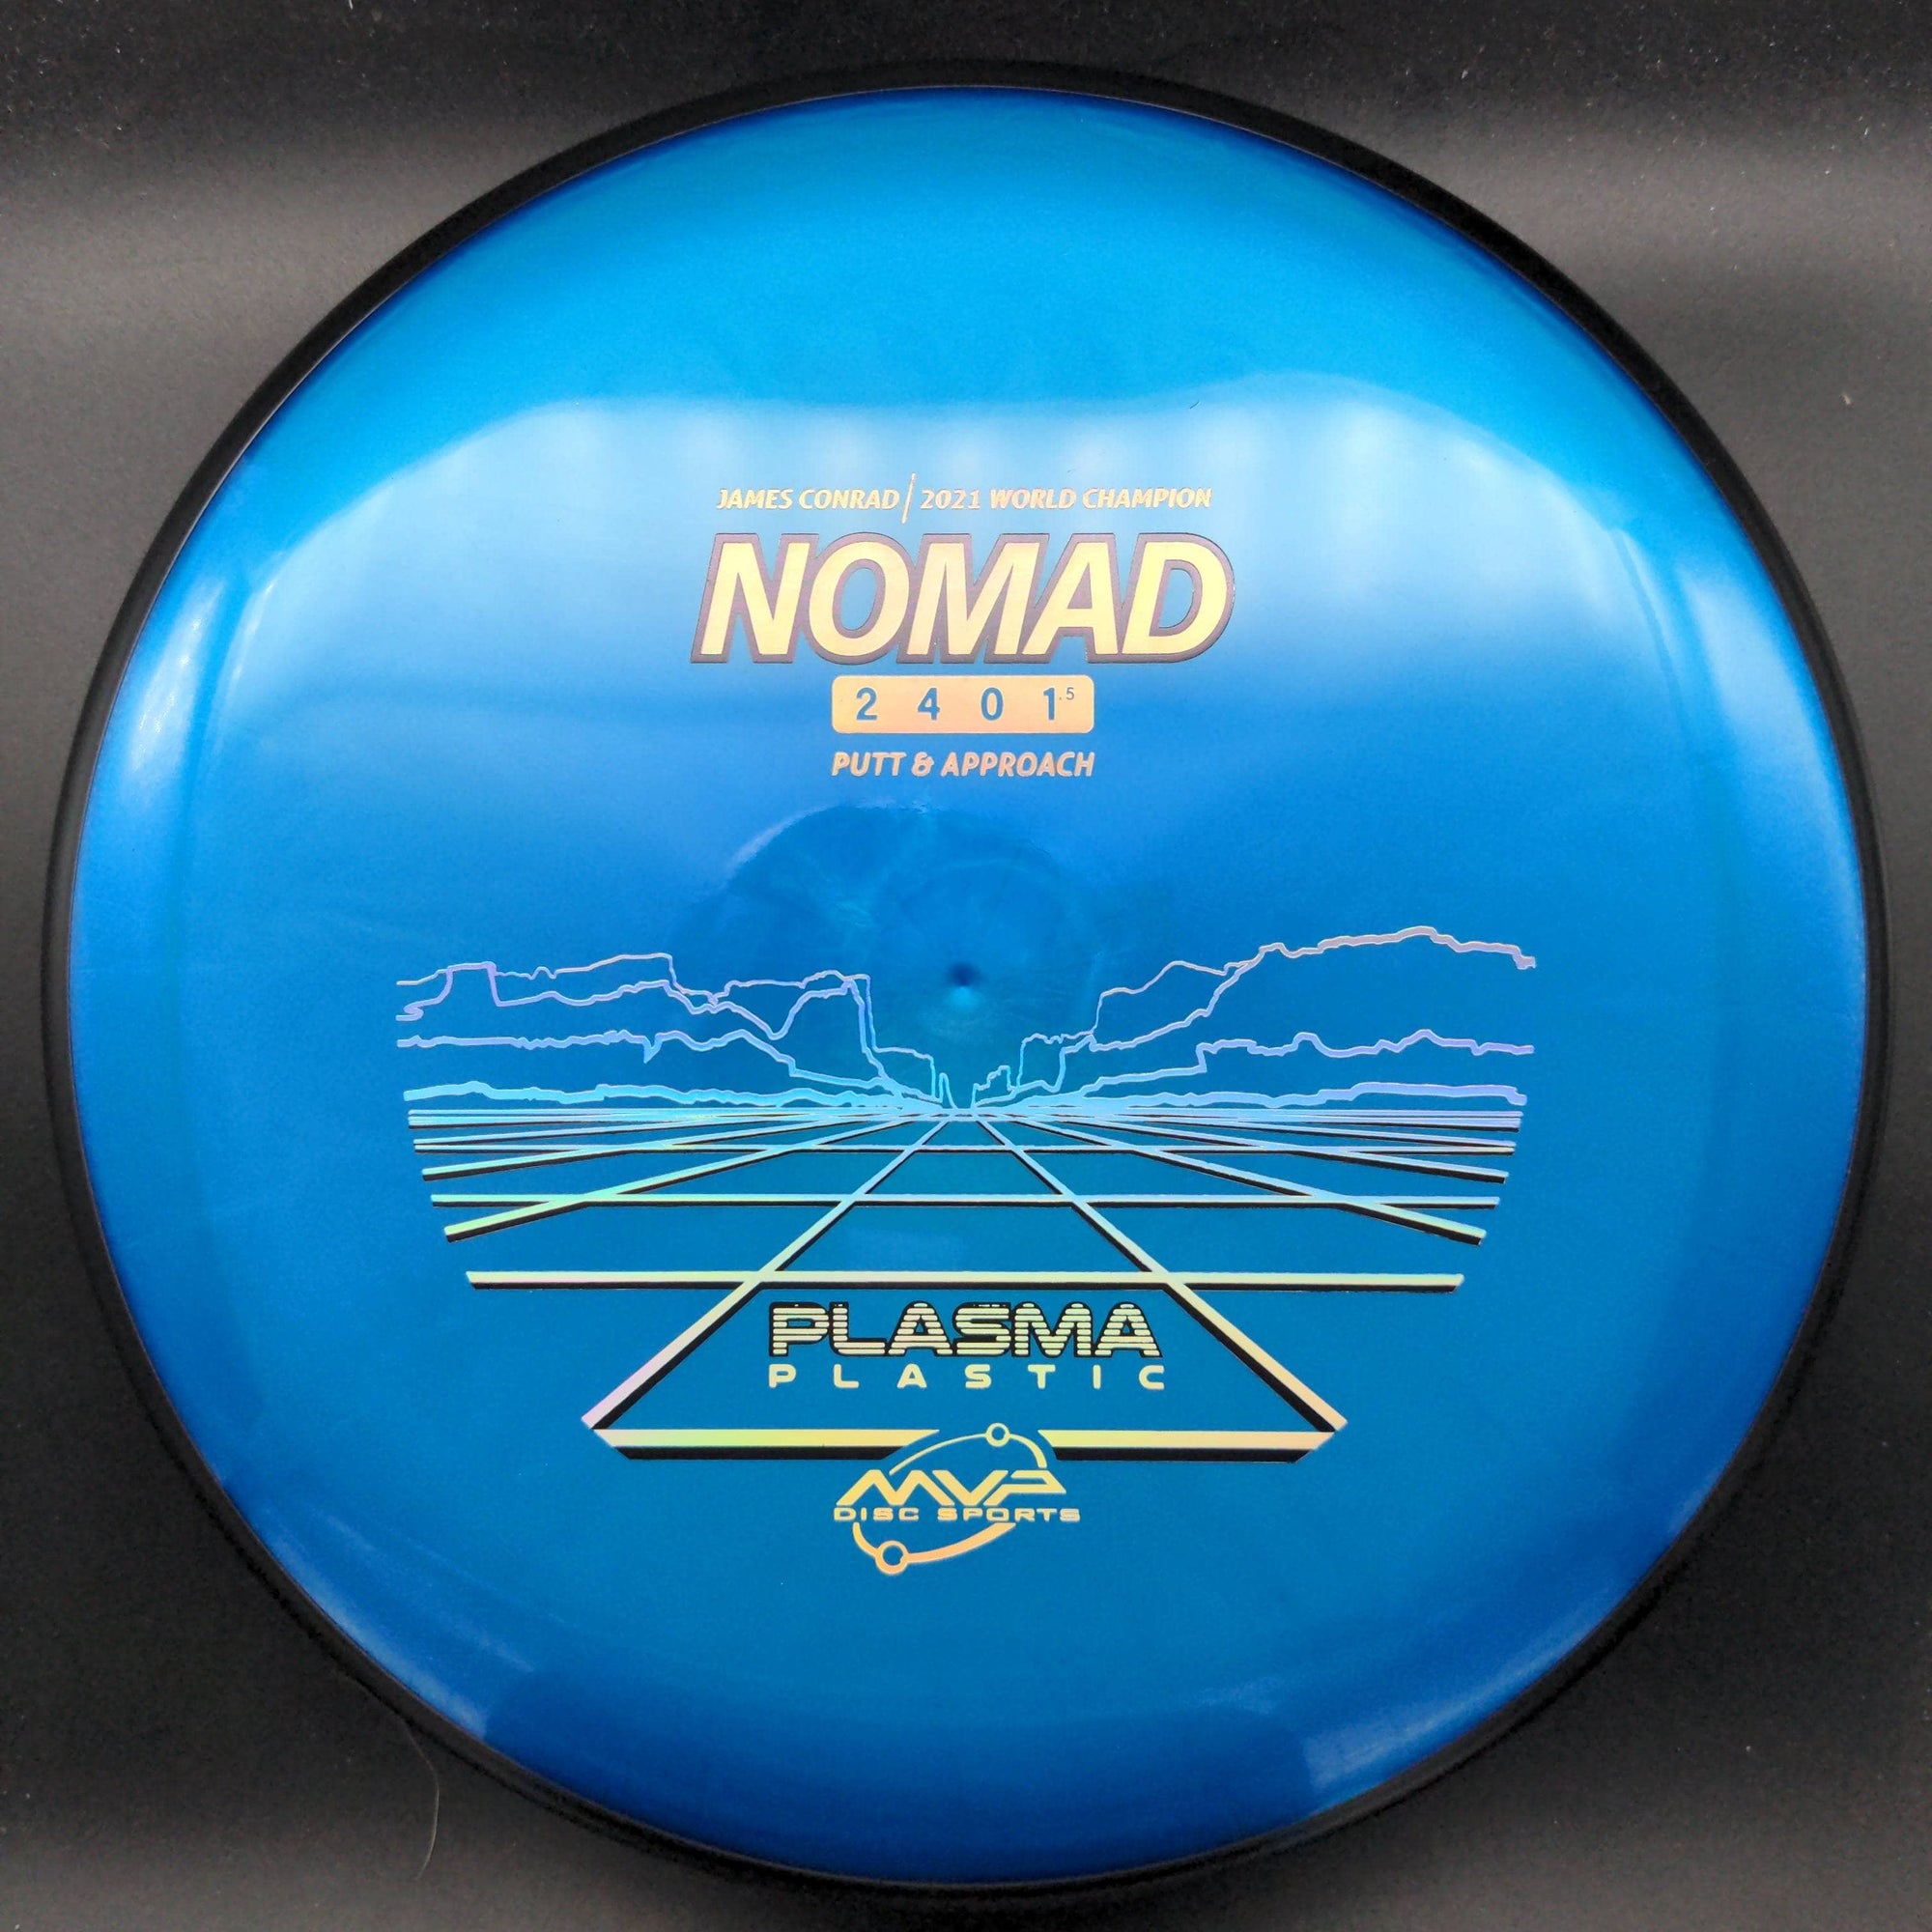 MVP Putter Blue 173g Nomad, Plasma James Conrad 2021 World Champion